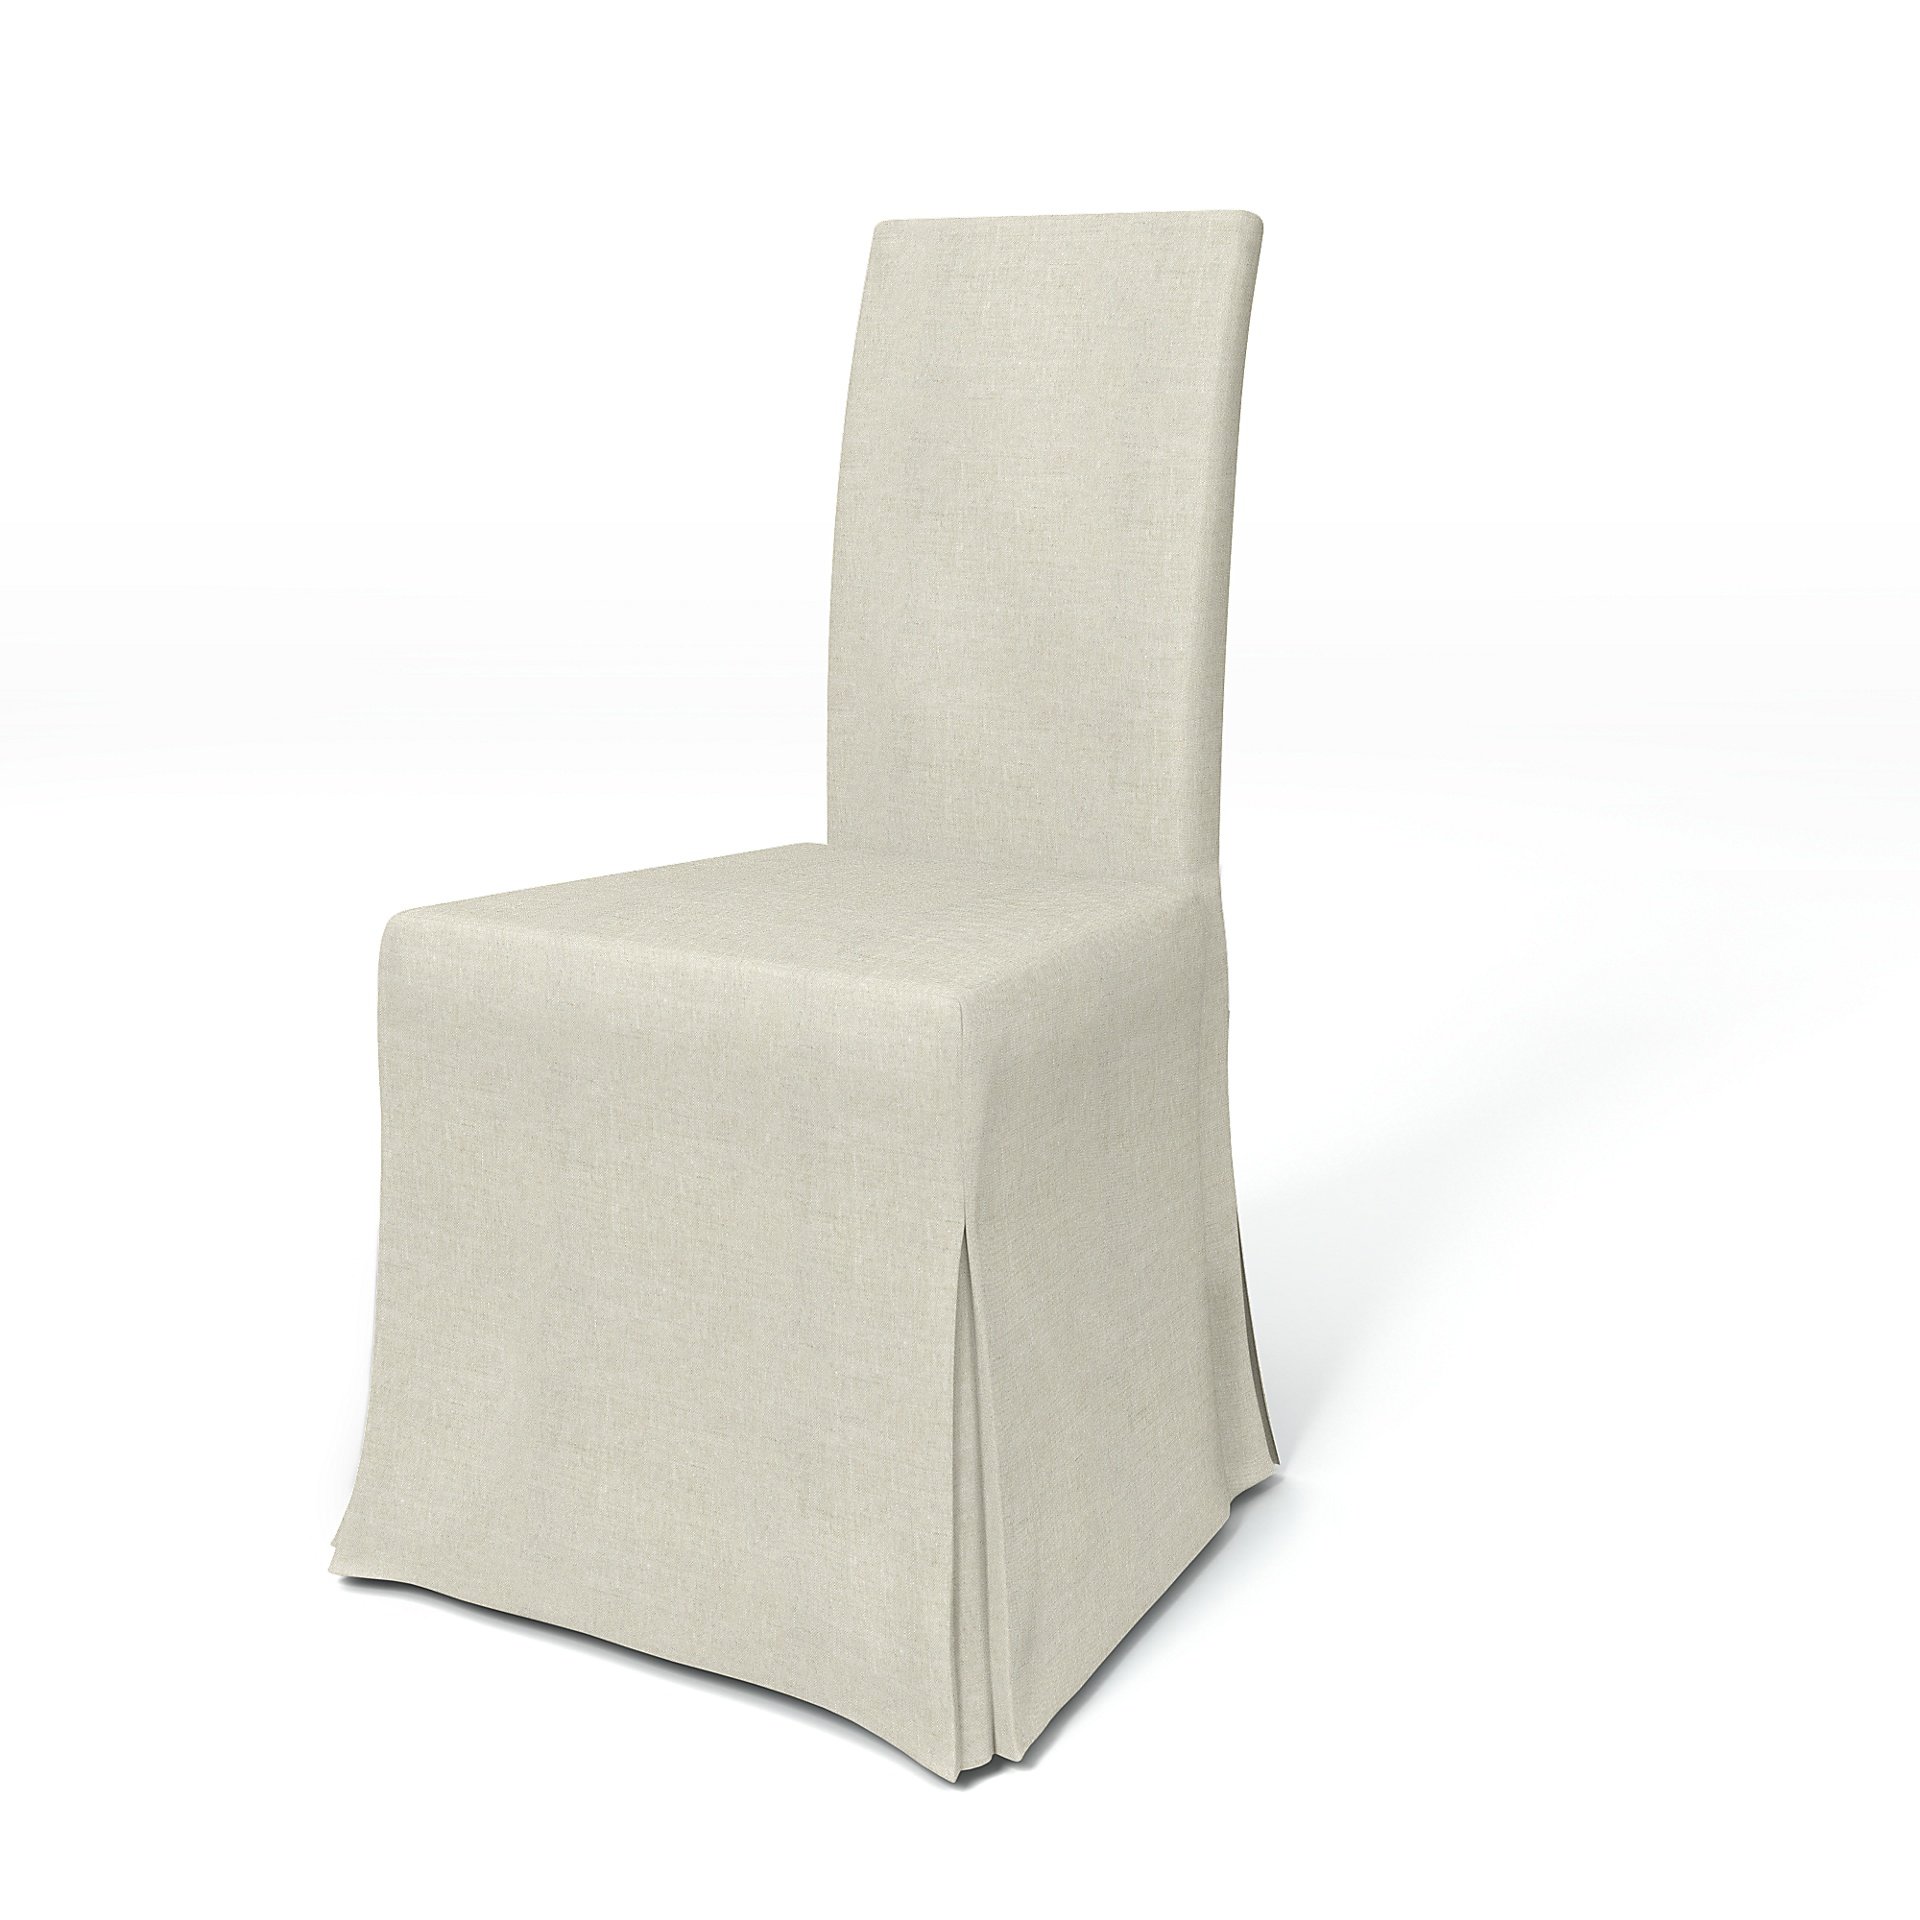 IKEA - Harry Dining Chair Cover, Natural, Linen - Bemz